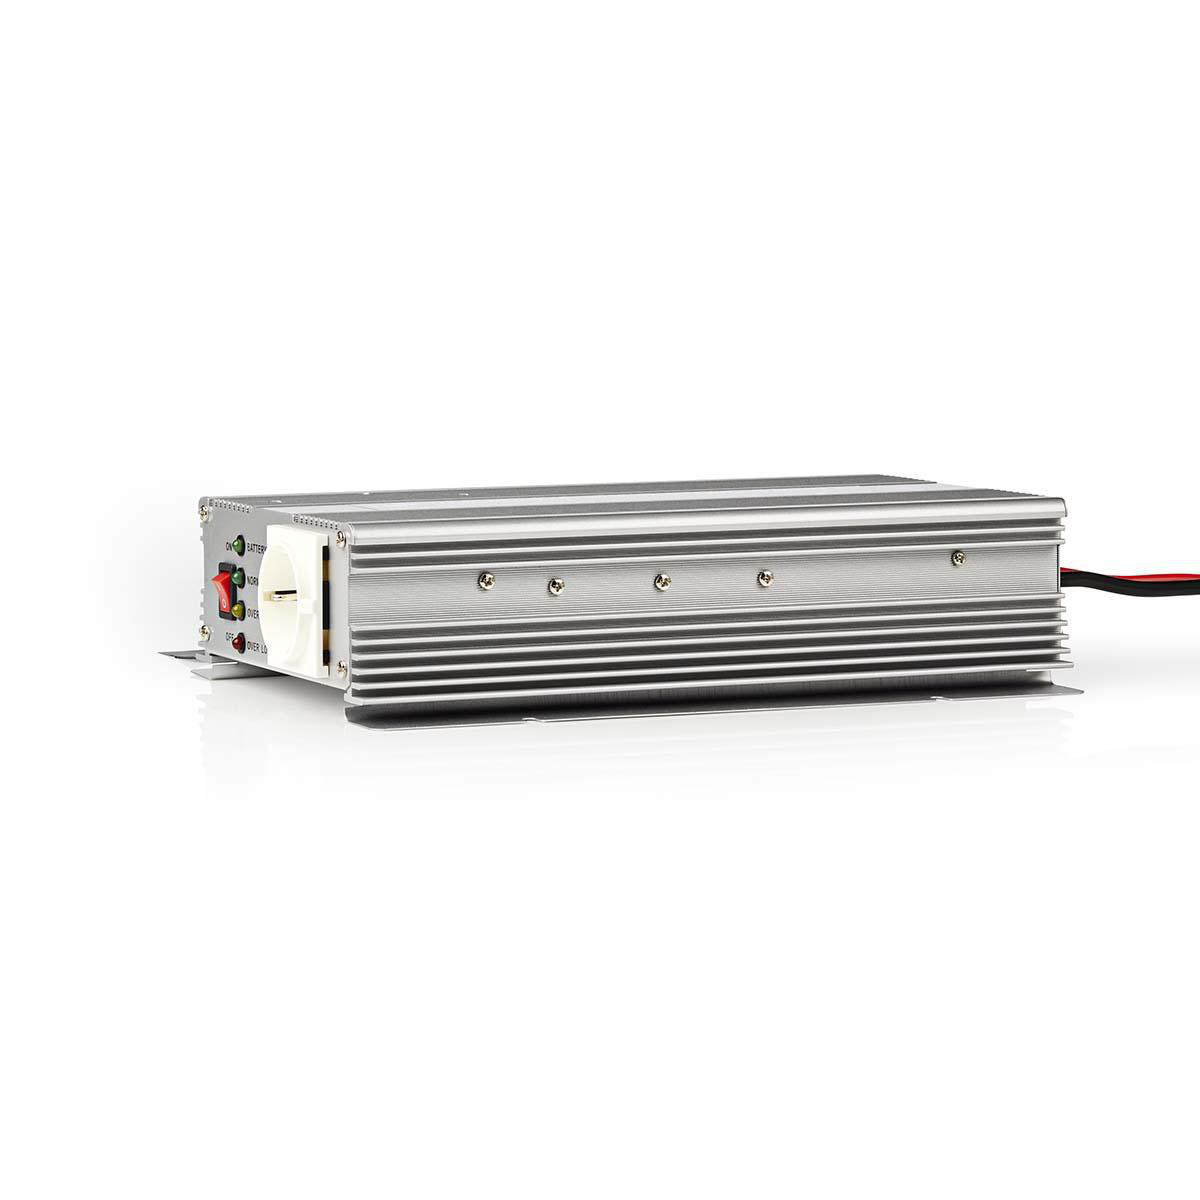 NEDIS PIMS600C12 Power Inverter